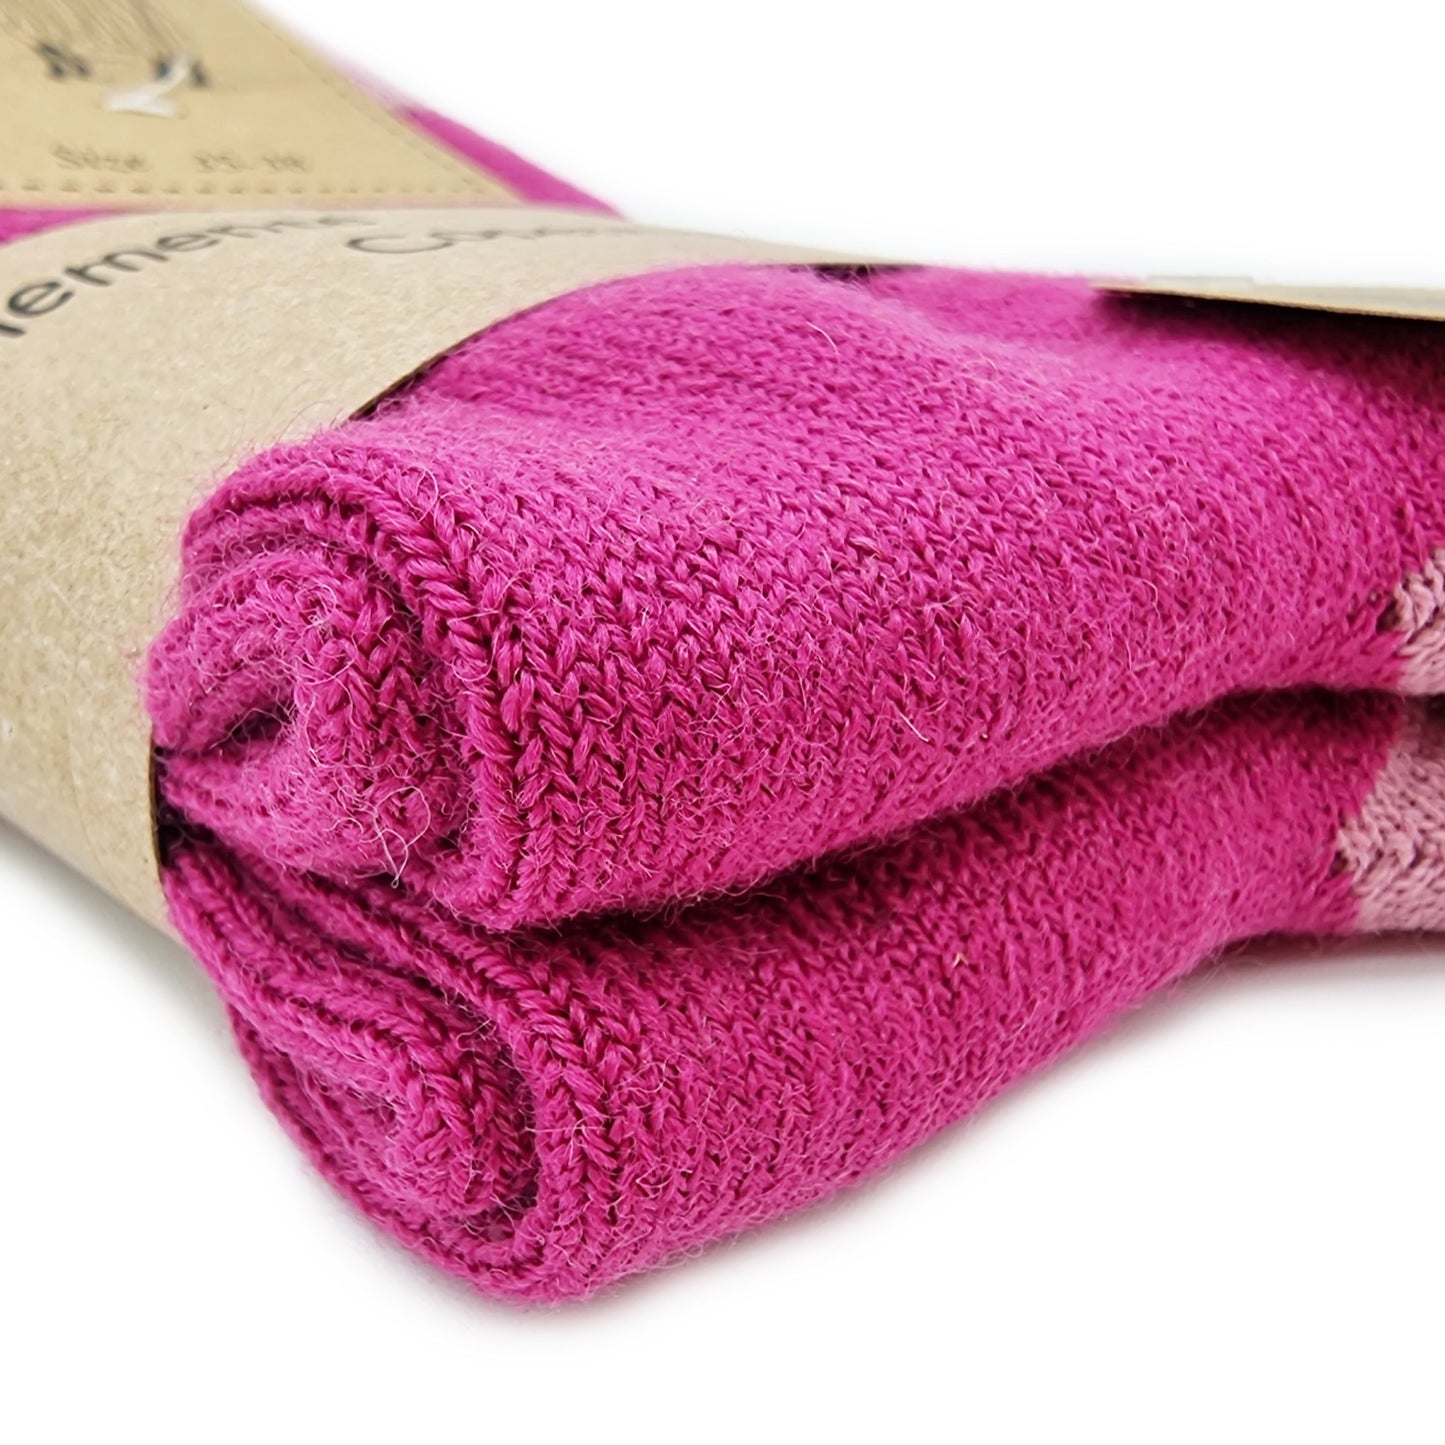 Socks in 45% wool, set of 2 pairs (fuchsia)